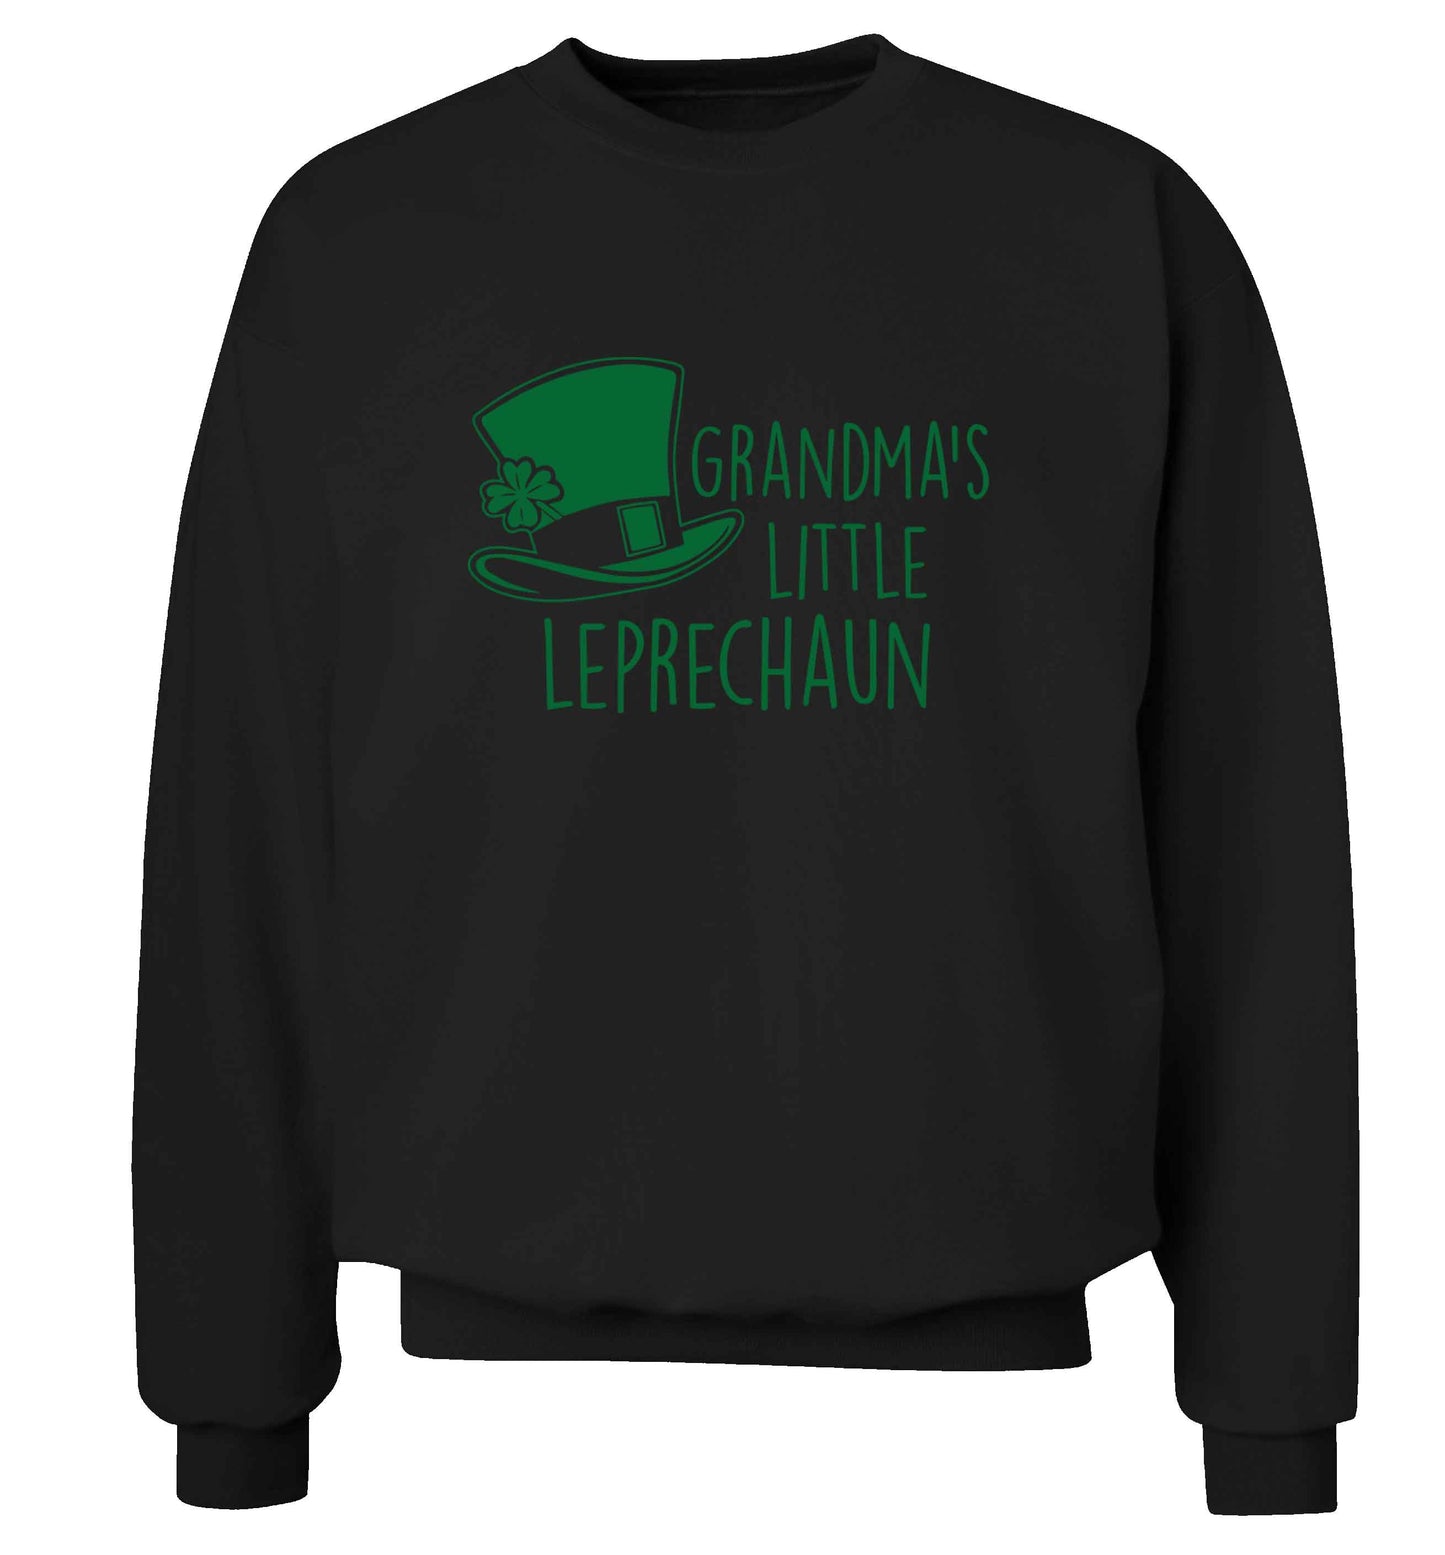 Grandma's little leprechaun adult's unisex black sweater 2XL